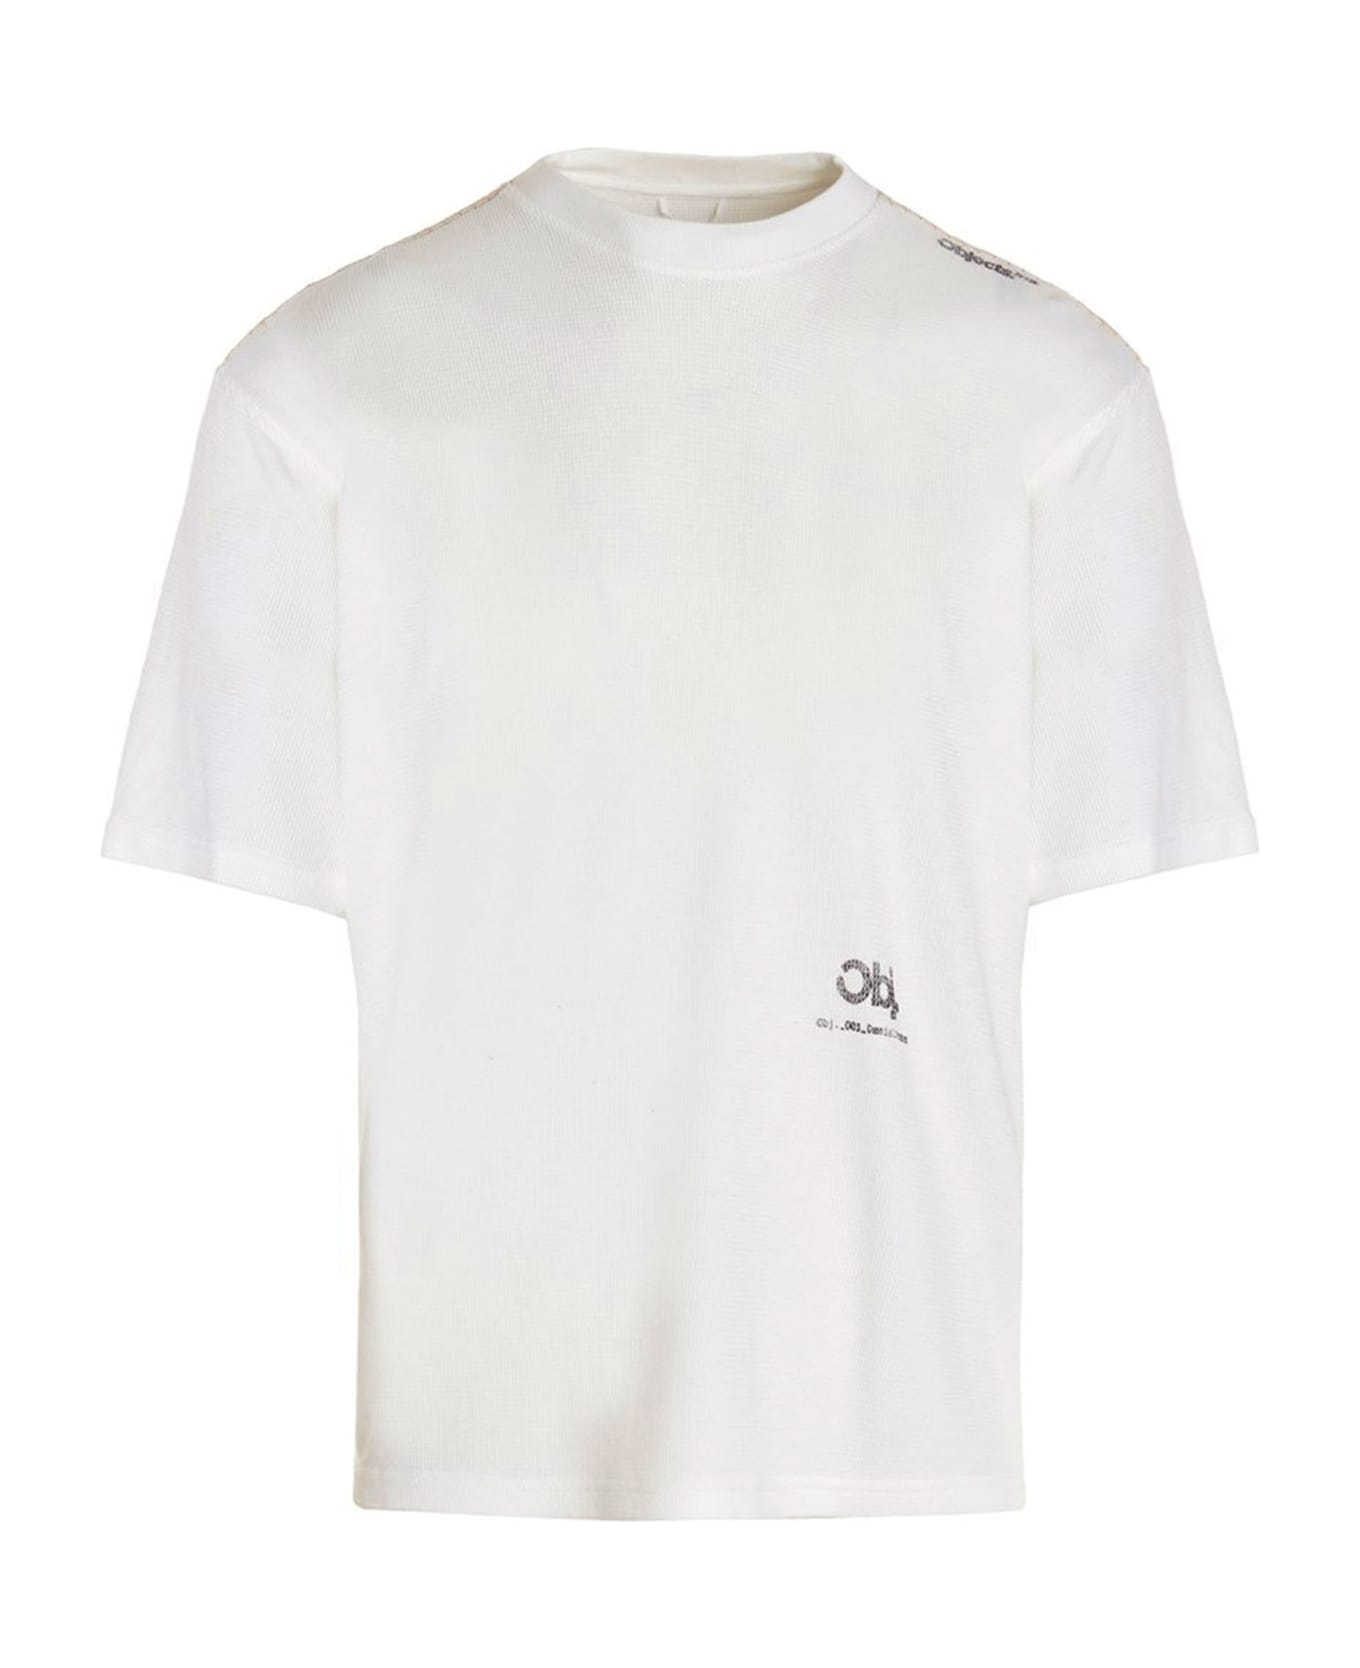 Objects Iv Life 'logo' T-shirt - White シャツ